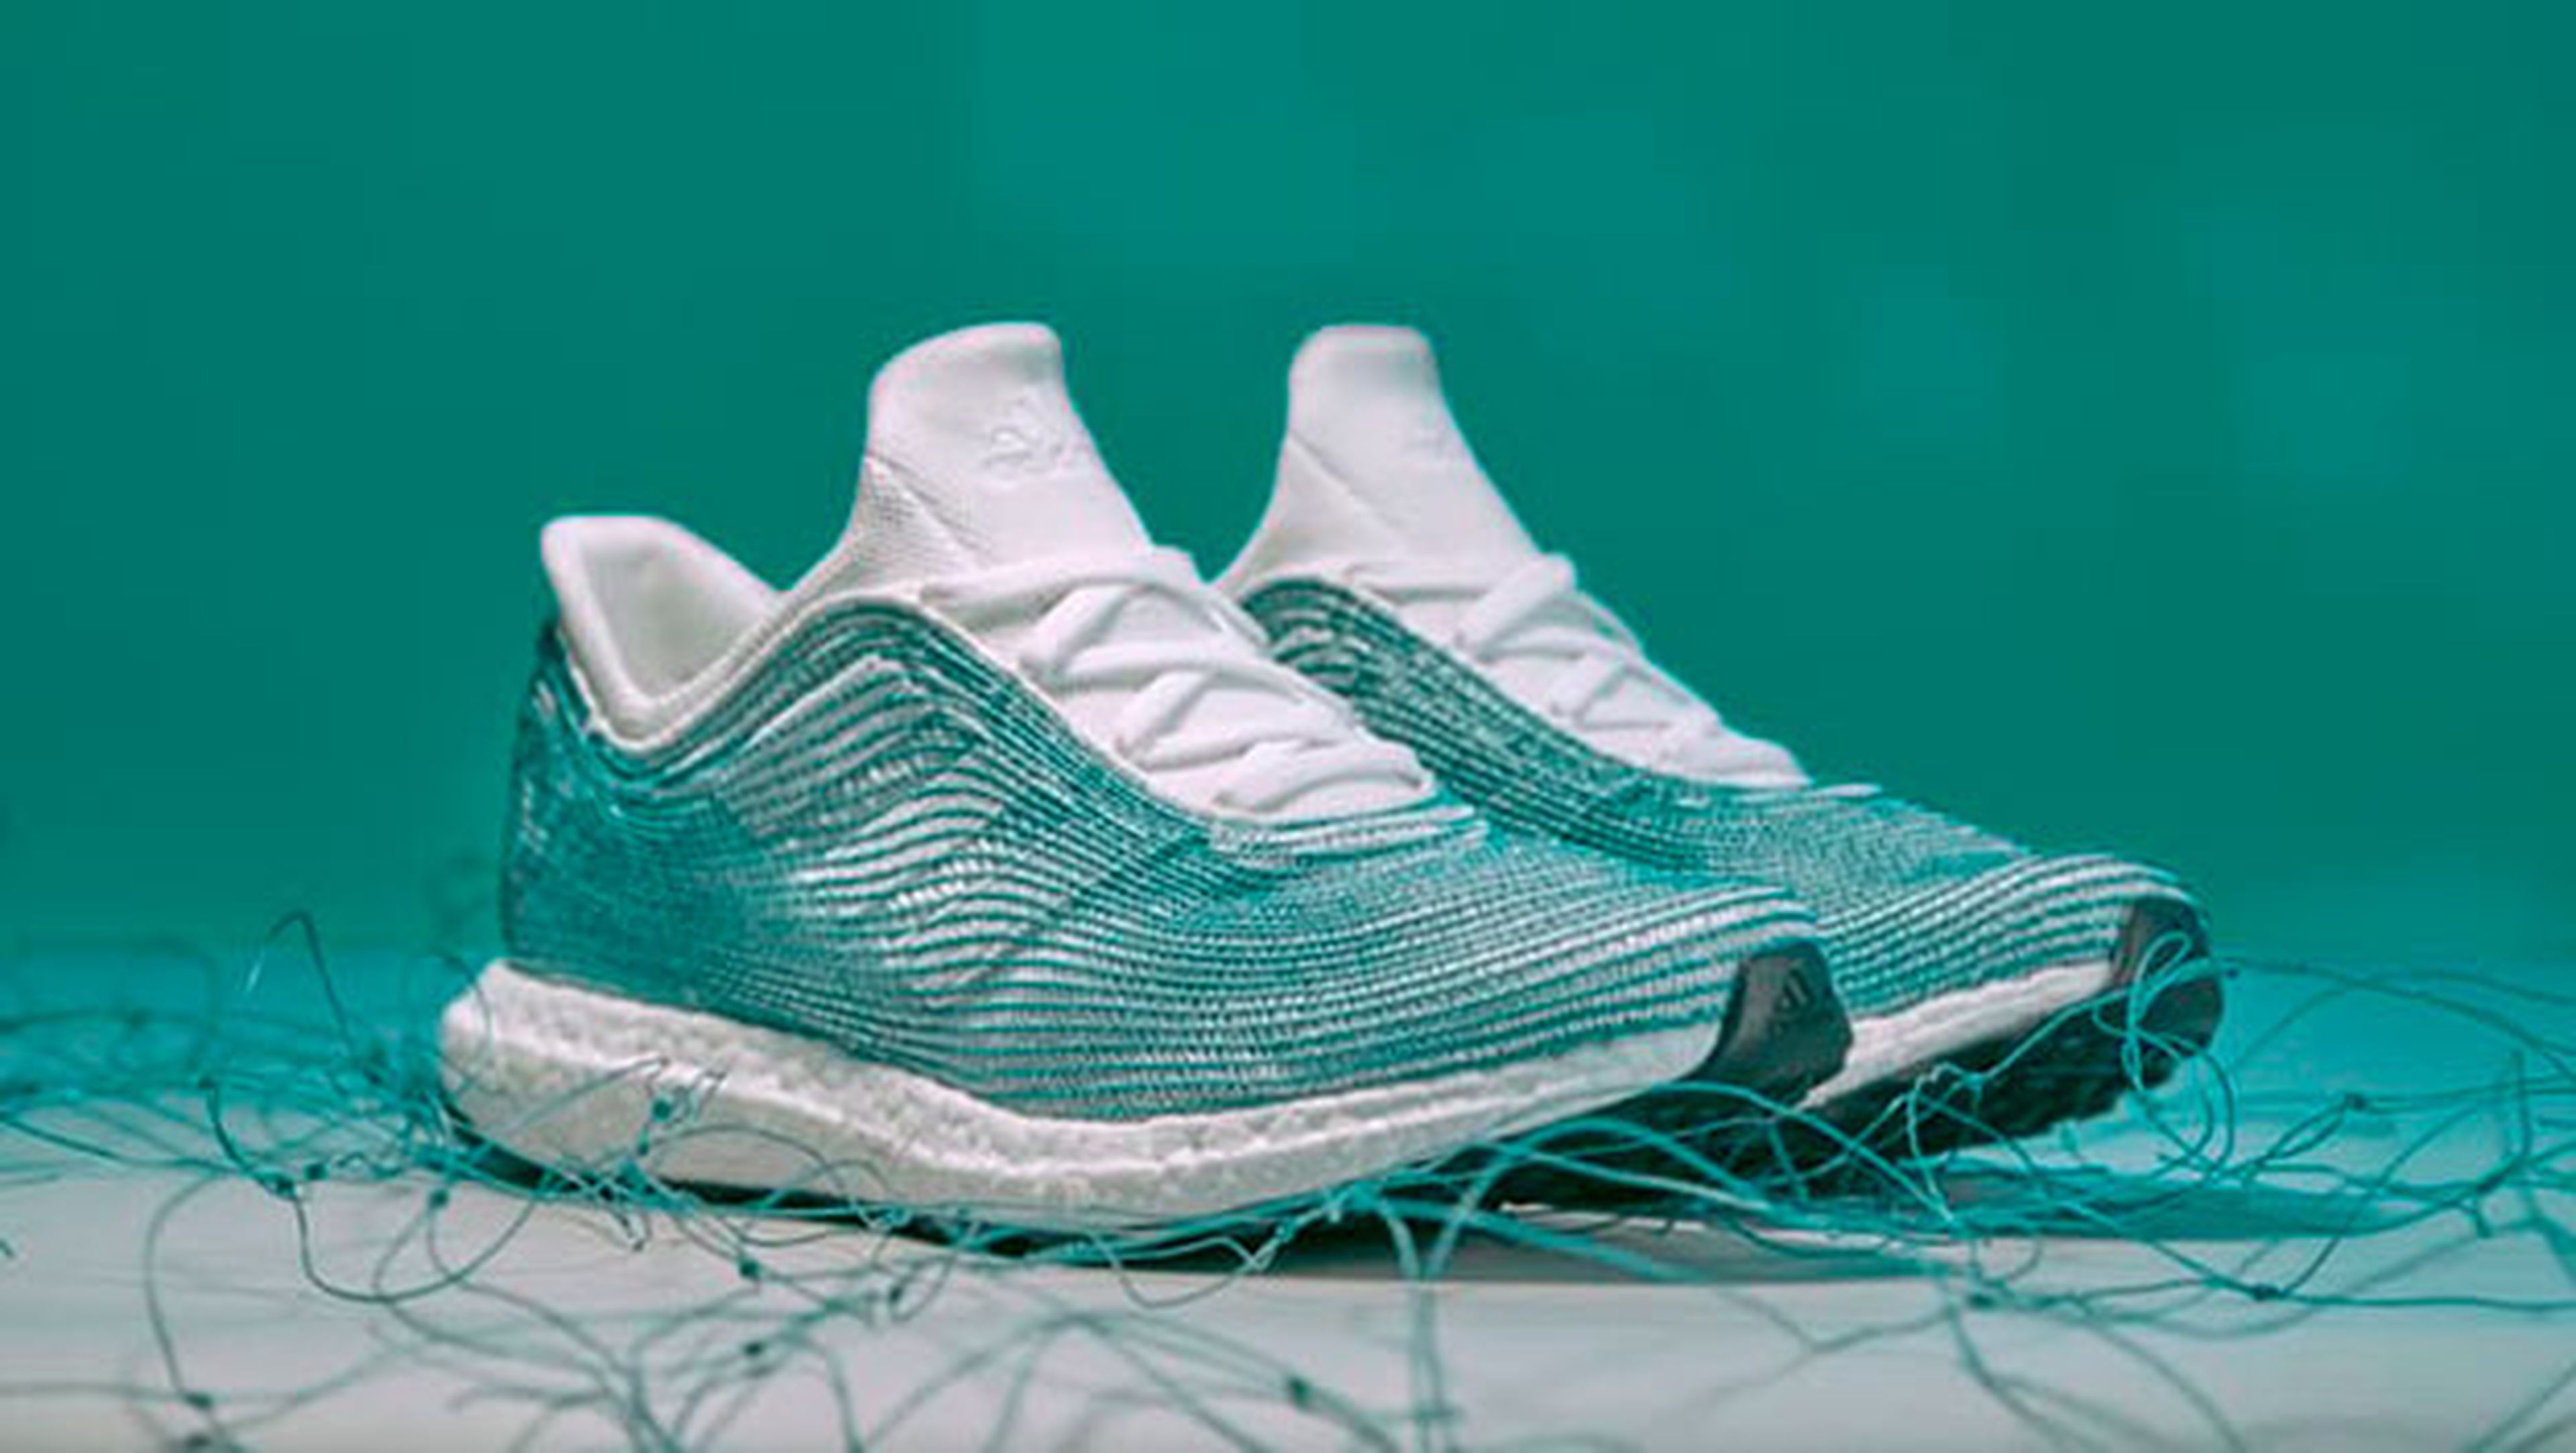 Adidas fabrica zapatillas con océano | Computer Hoy